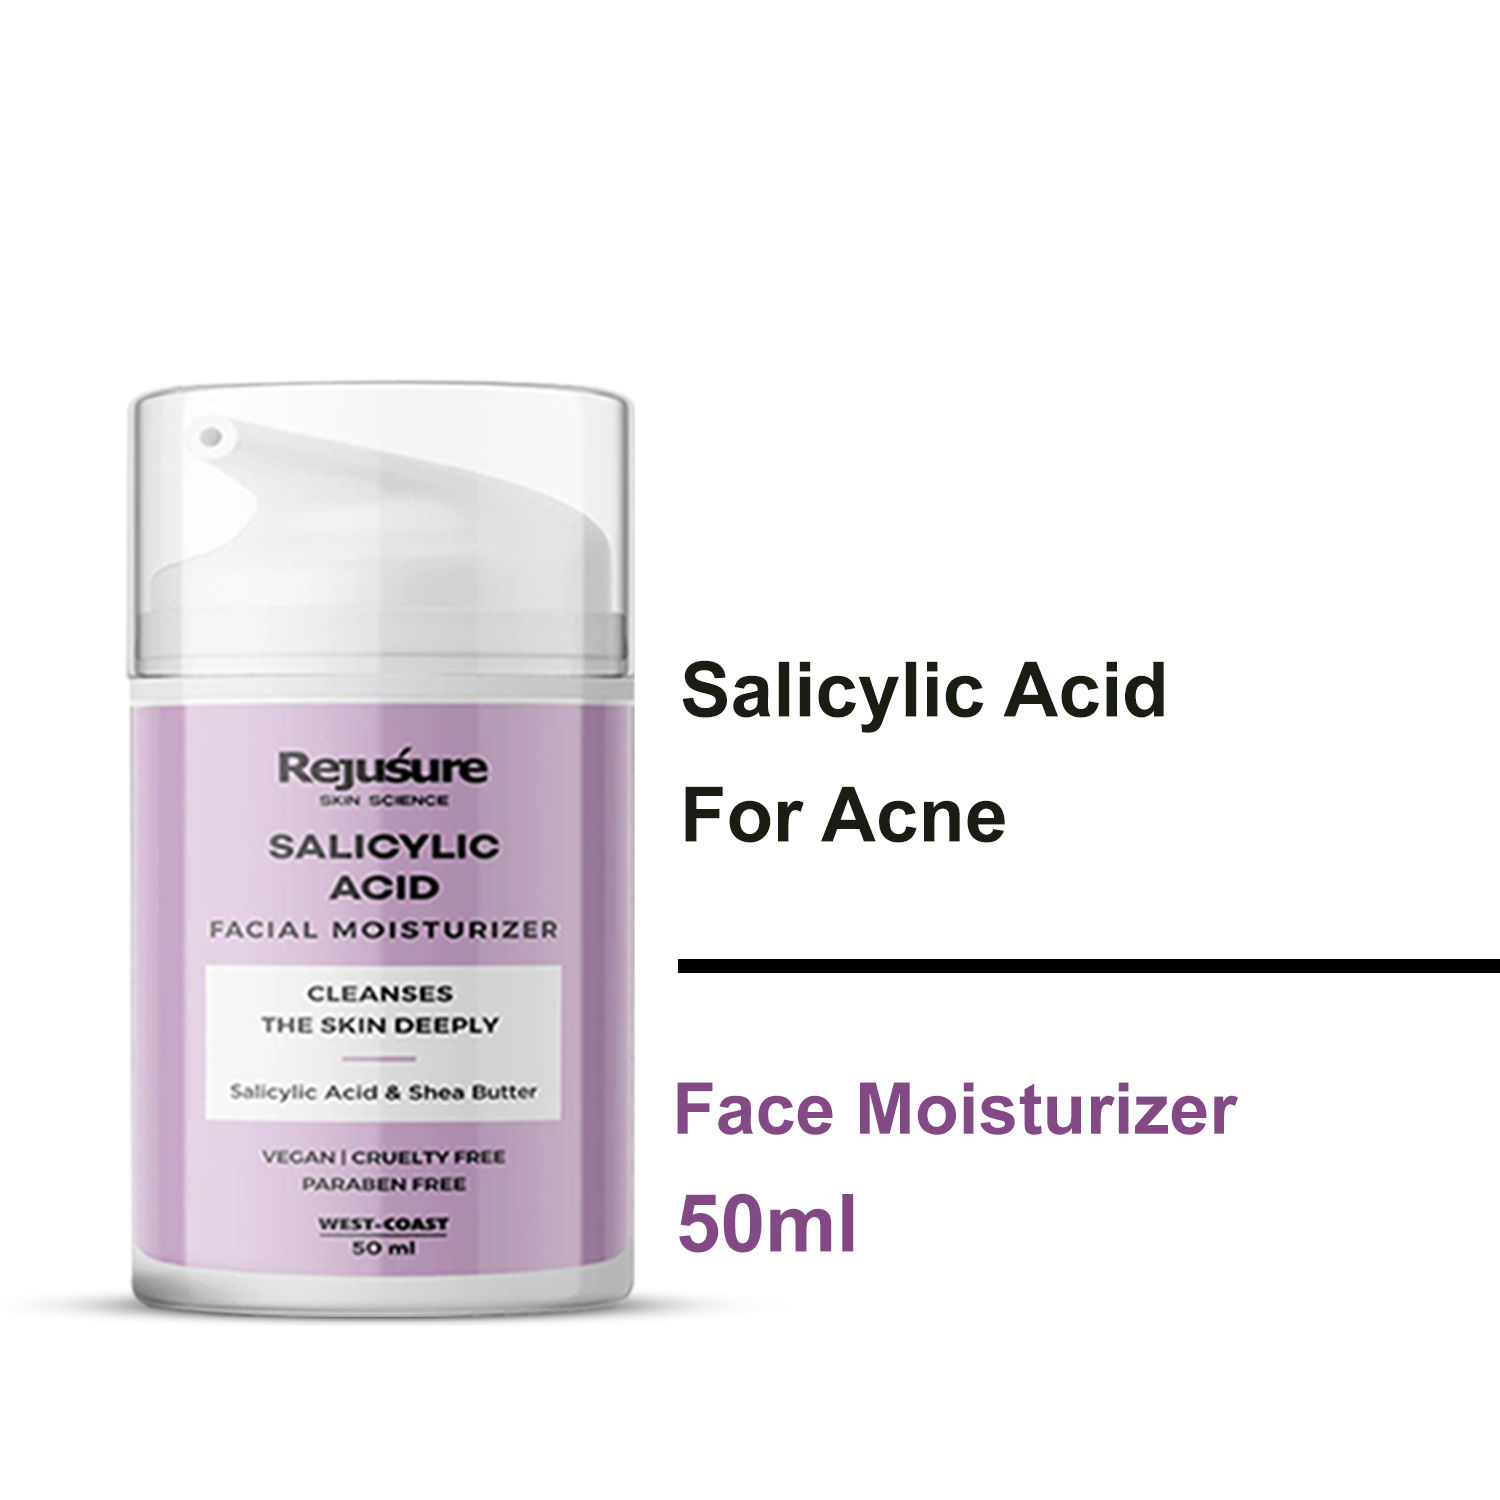 Rejusure Salicylic Acid Moisturizer Fights Breakout,Blackheads & Reduces Pores Cream for Face